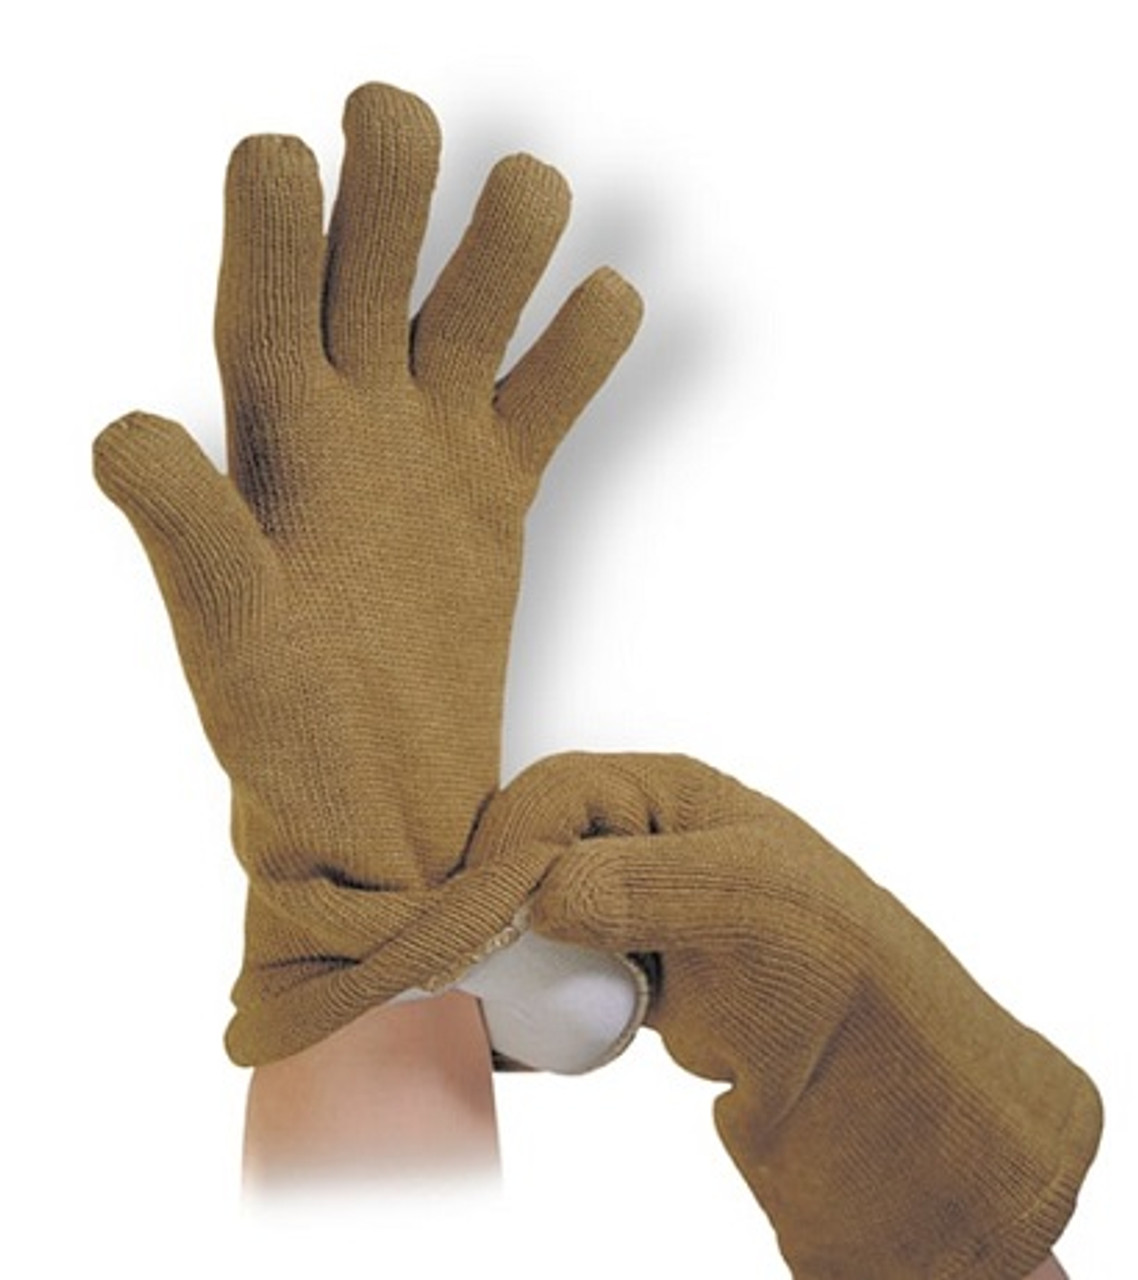 ESD Heat Resistant Gloves